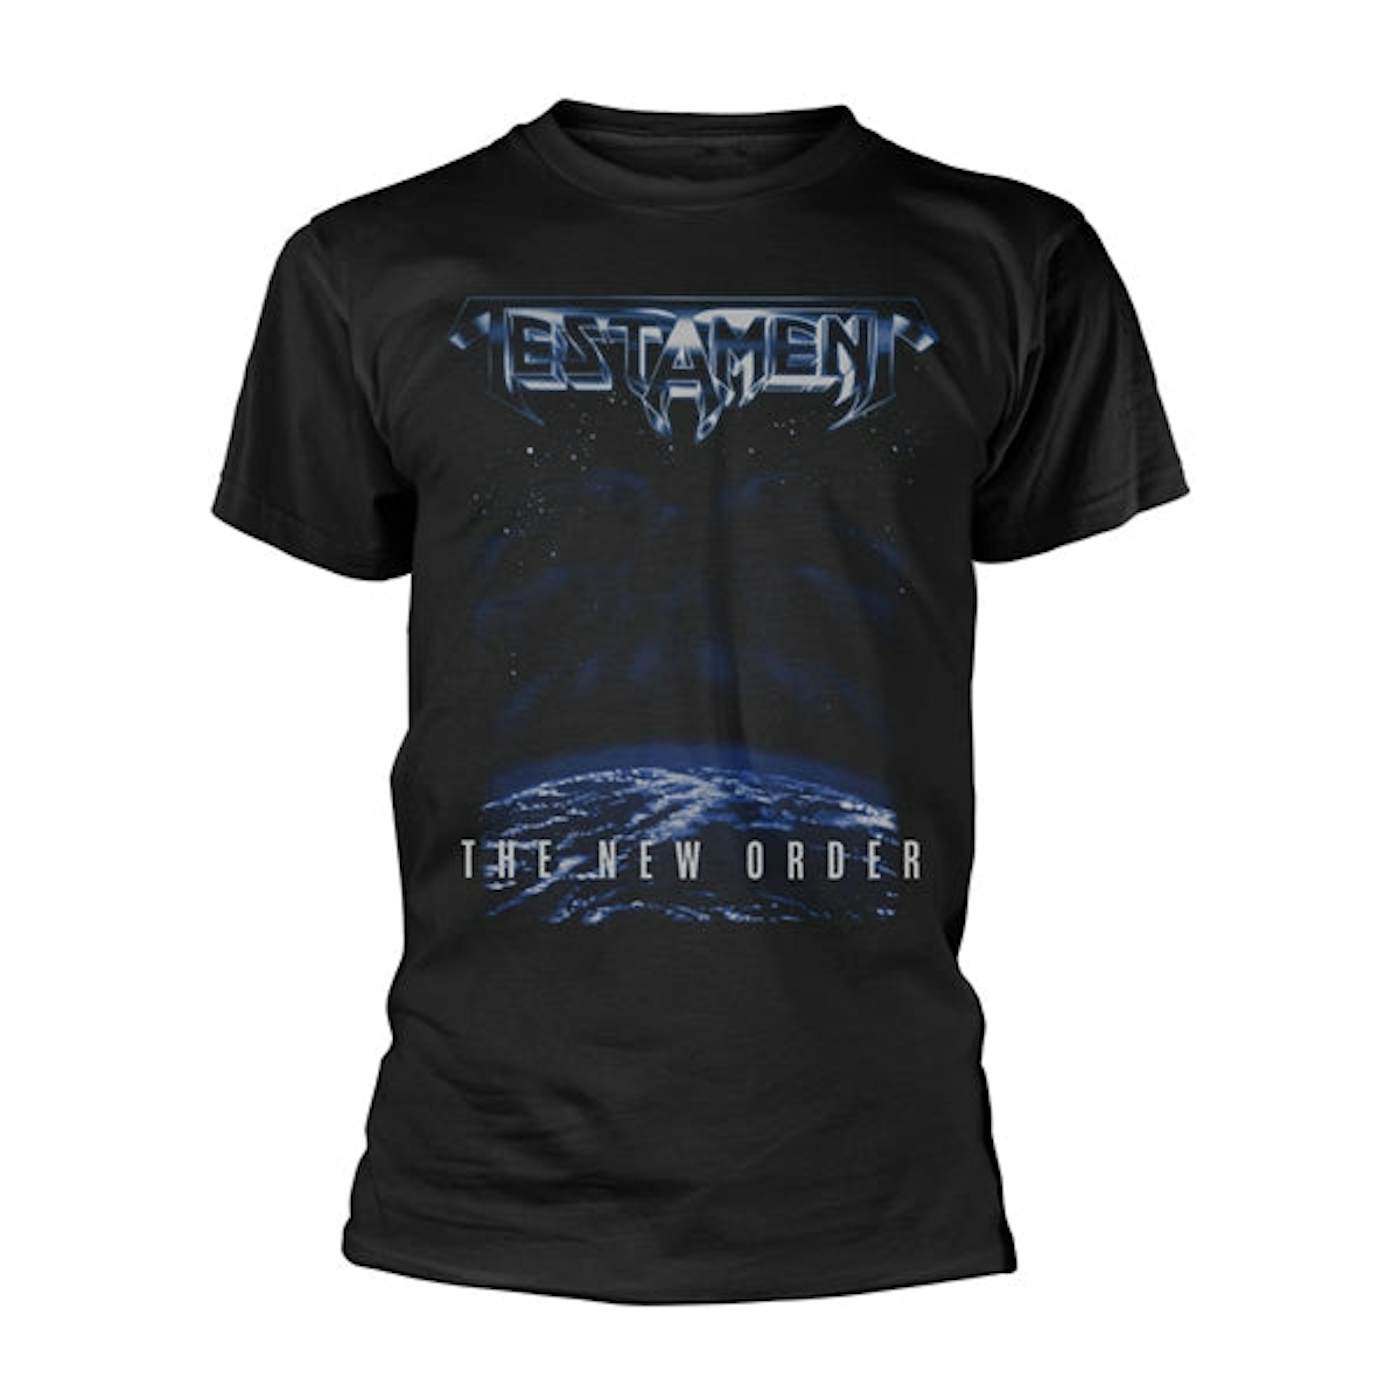 Testament T-Shirt - The New Order